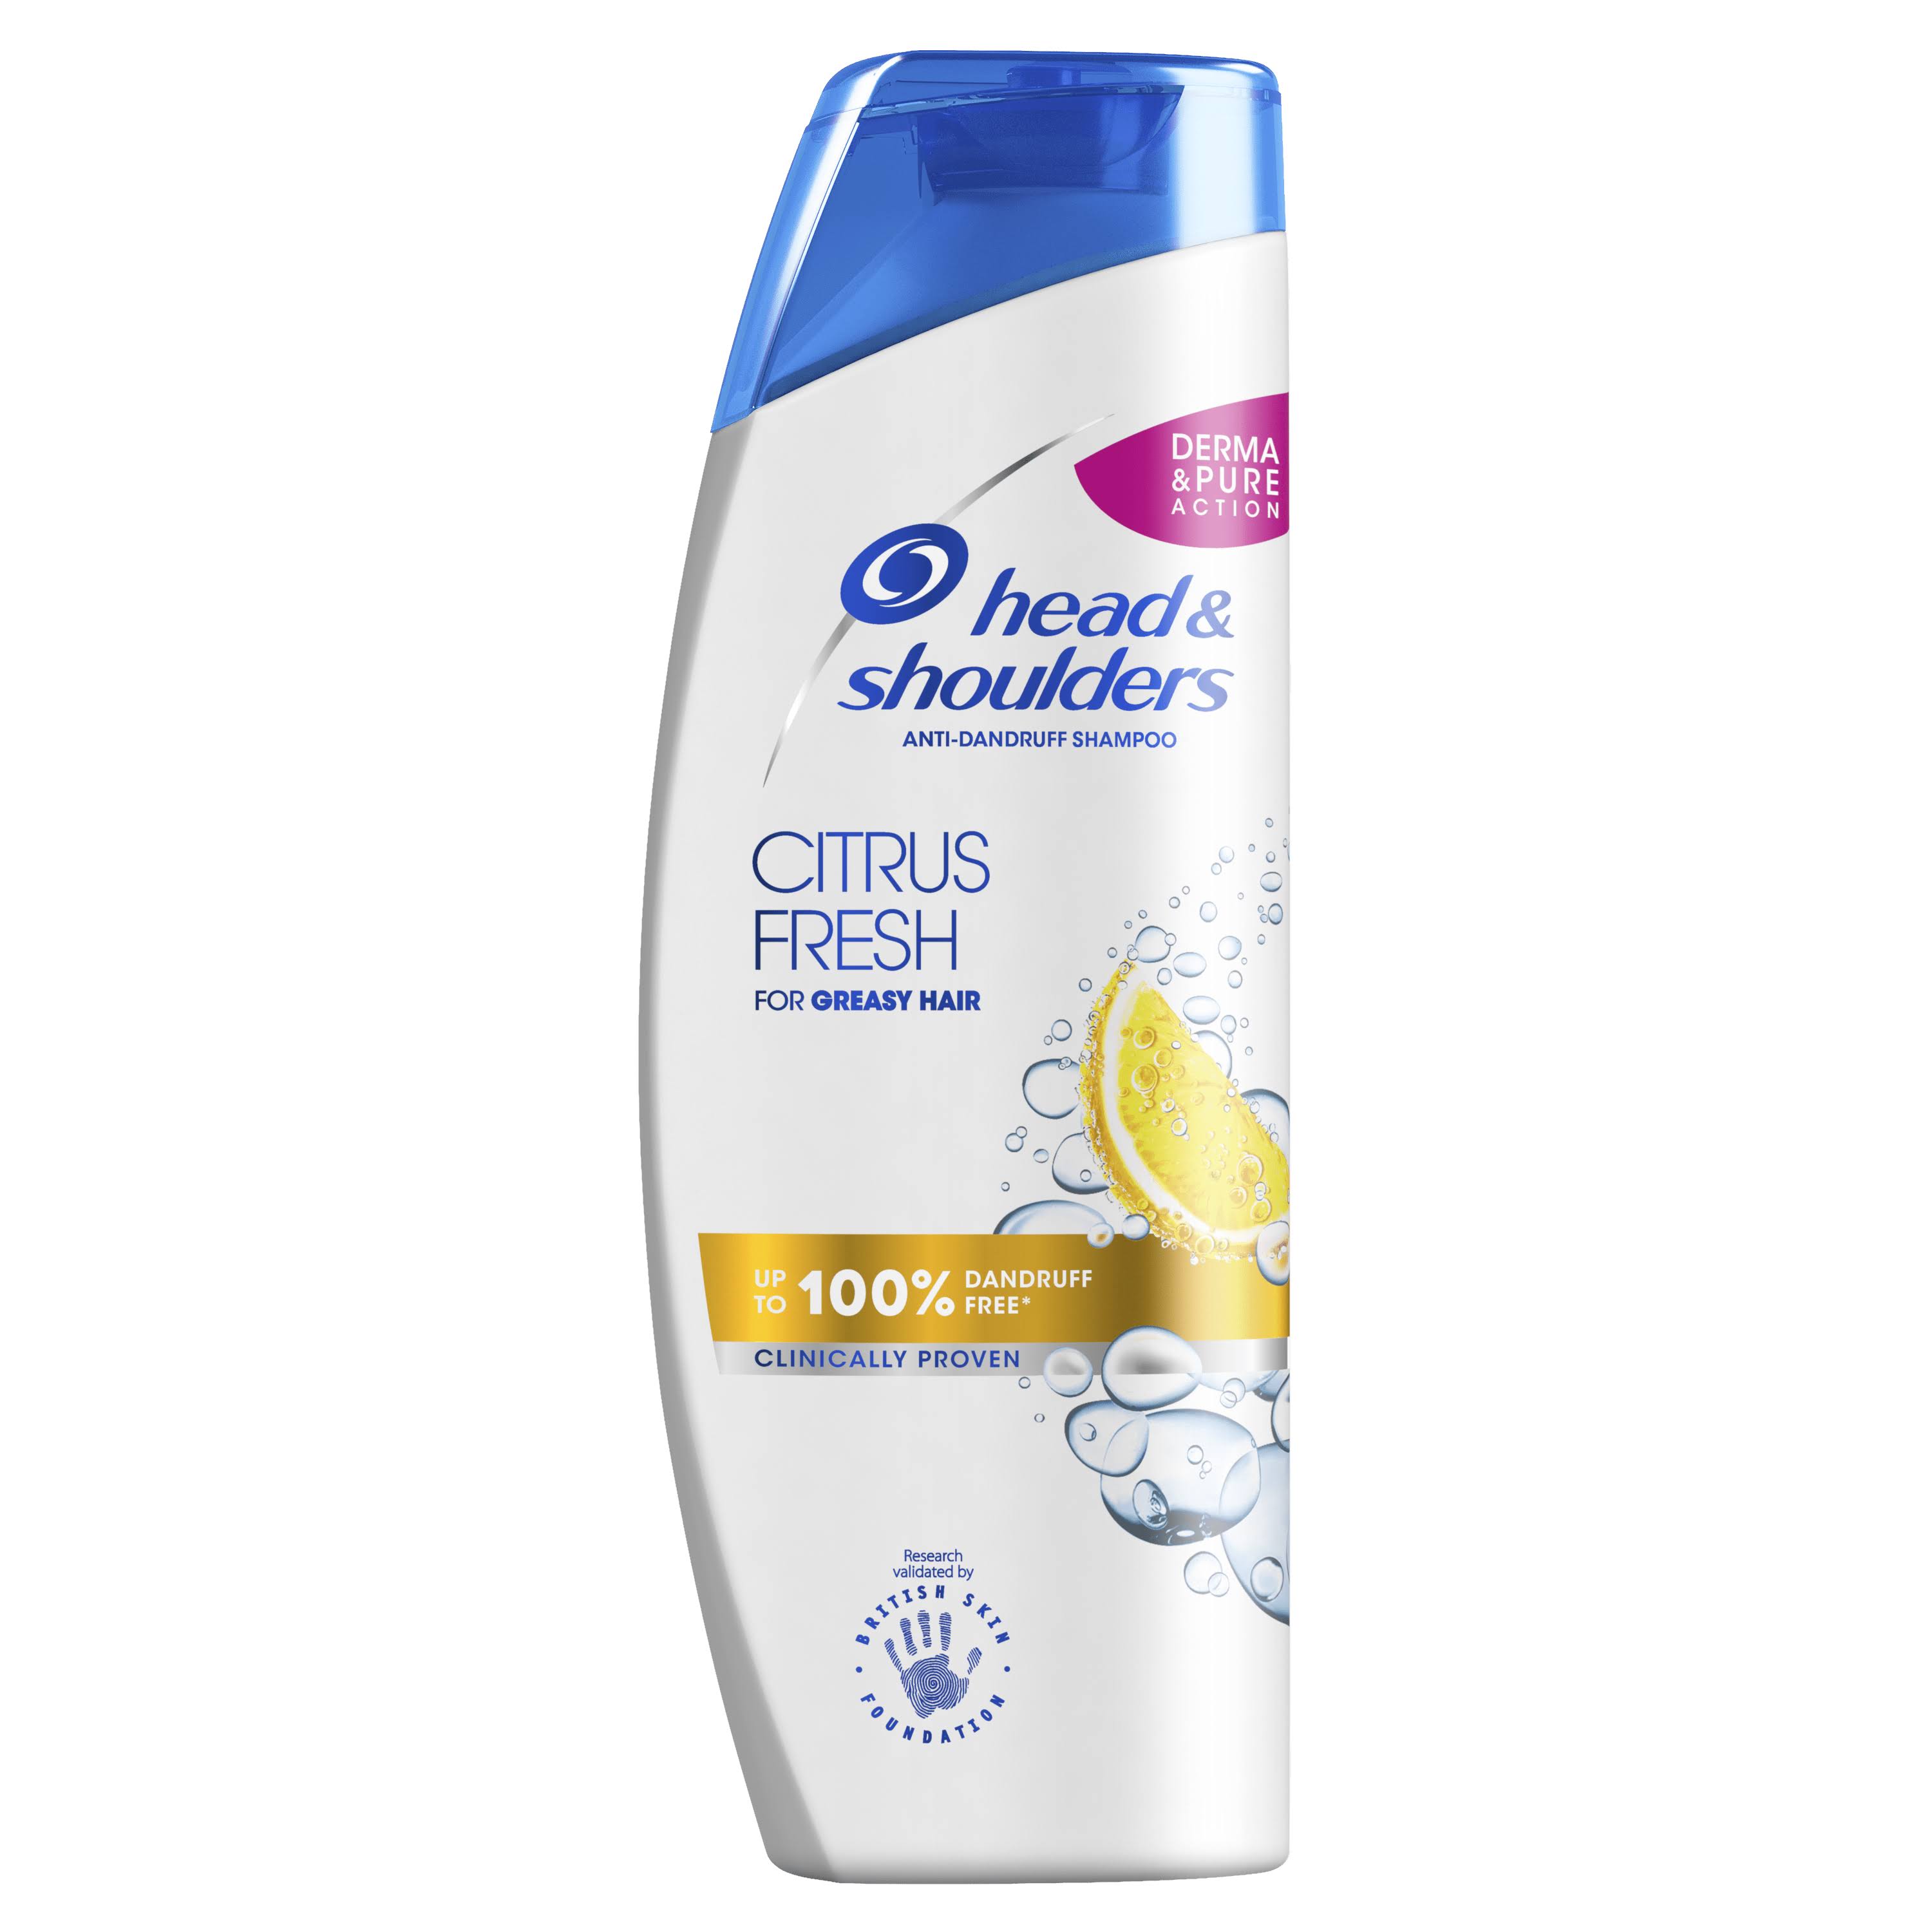 Head & Shoulders Anti Dandruff Shampoo - Citrus Fresh, 500ml